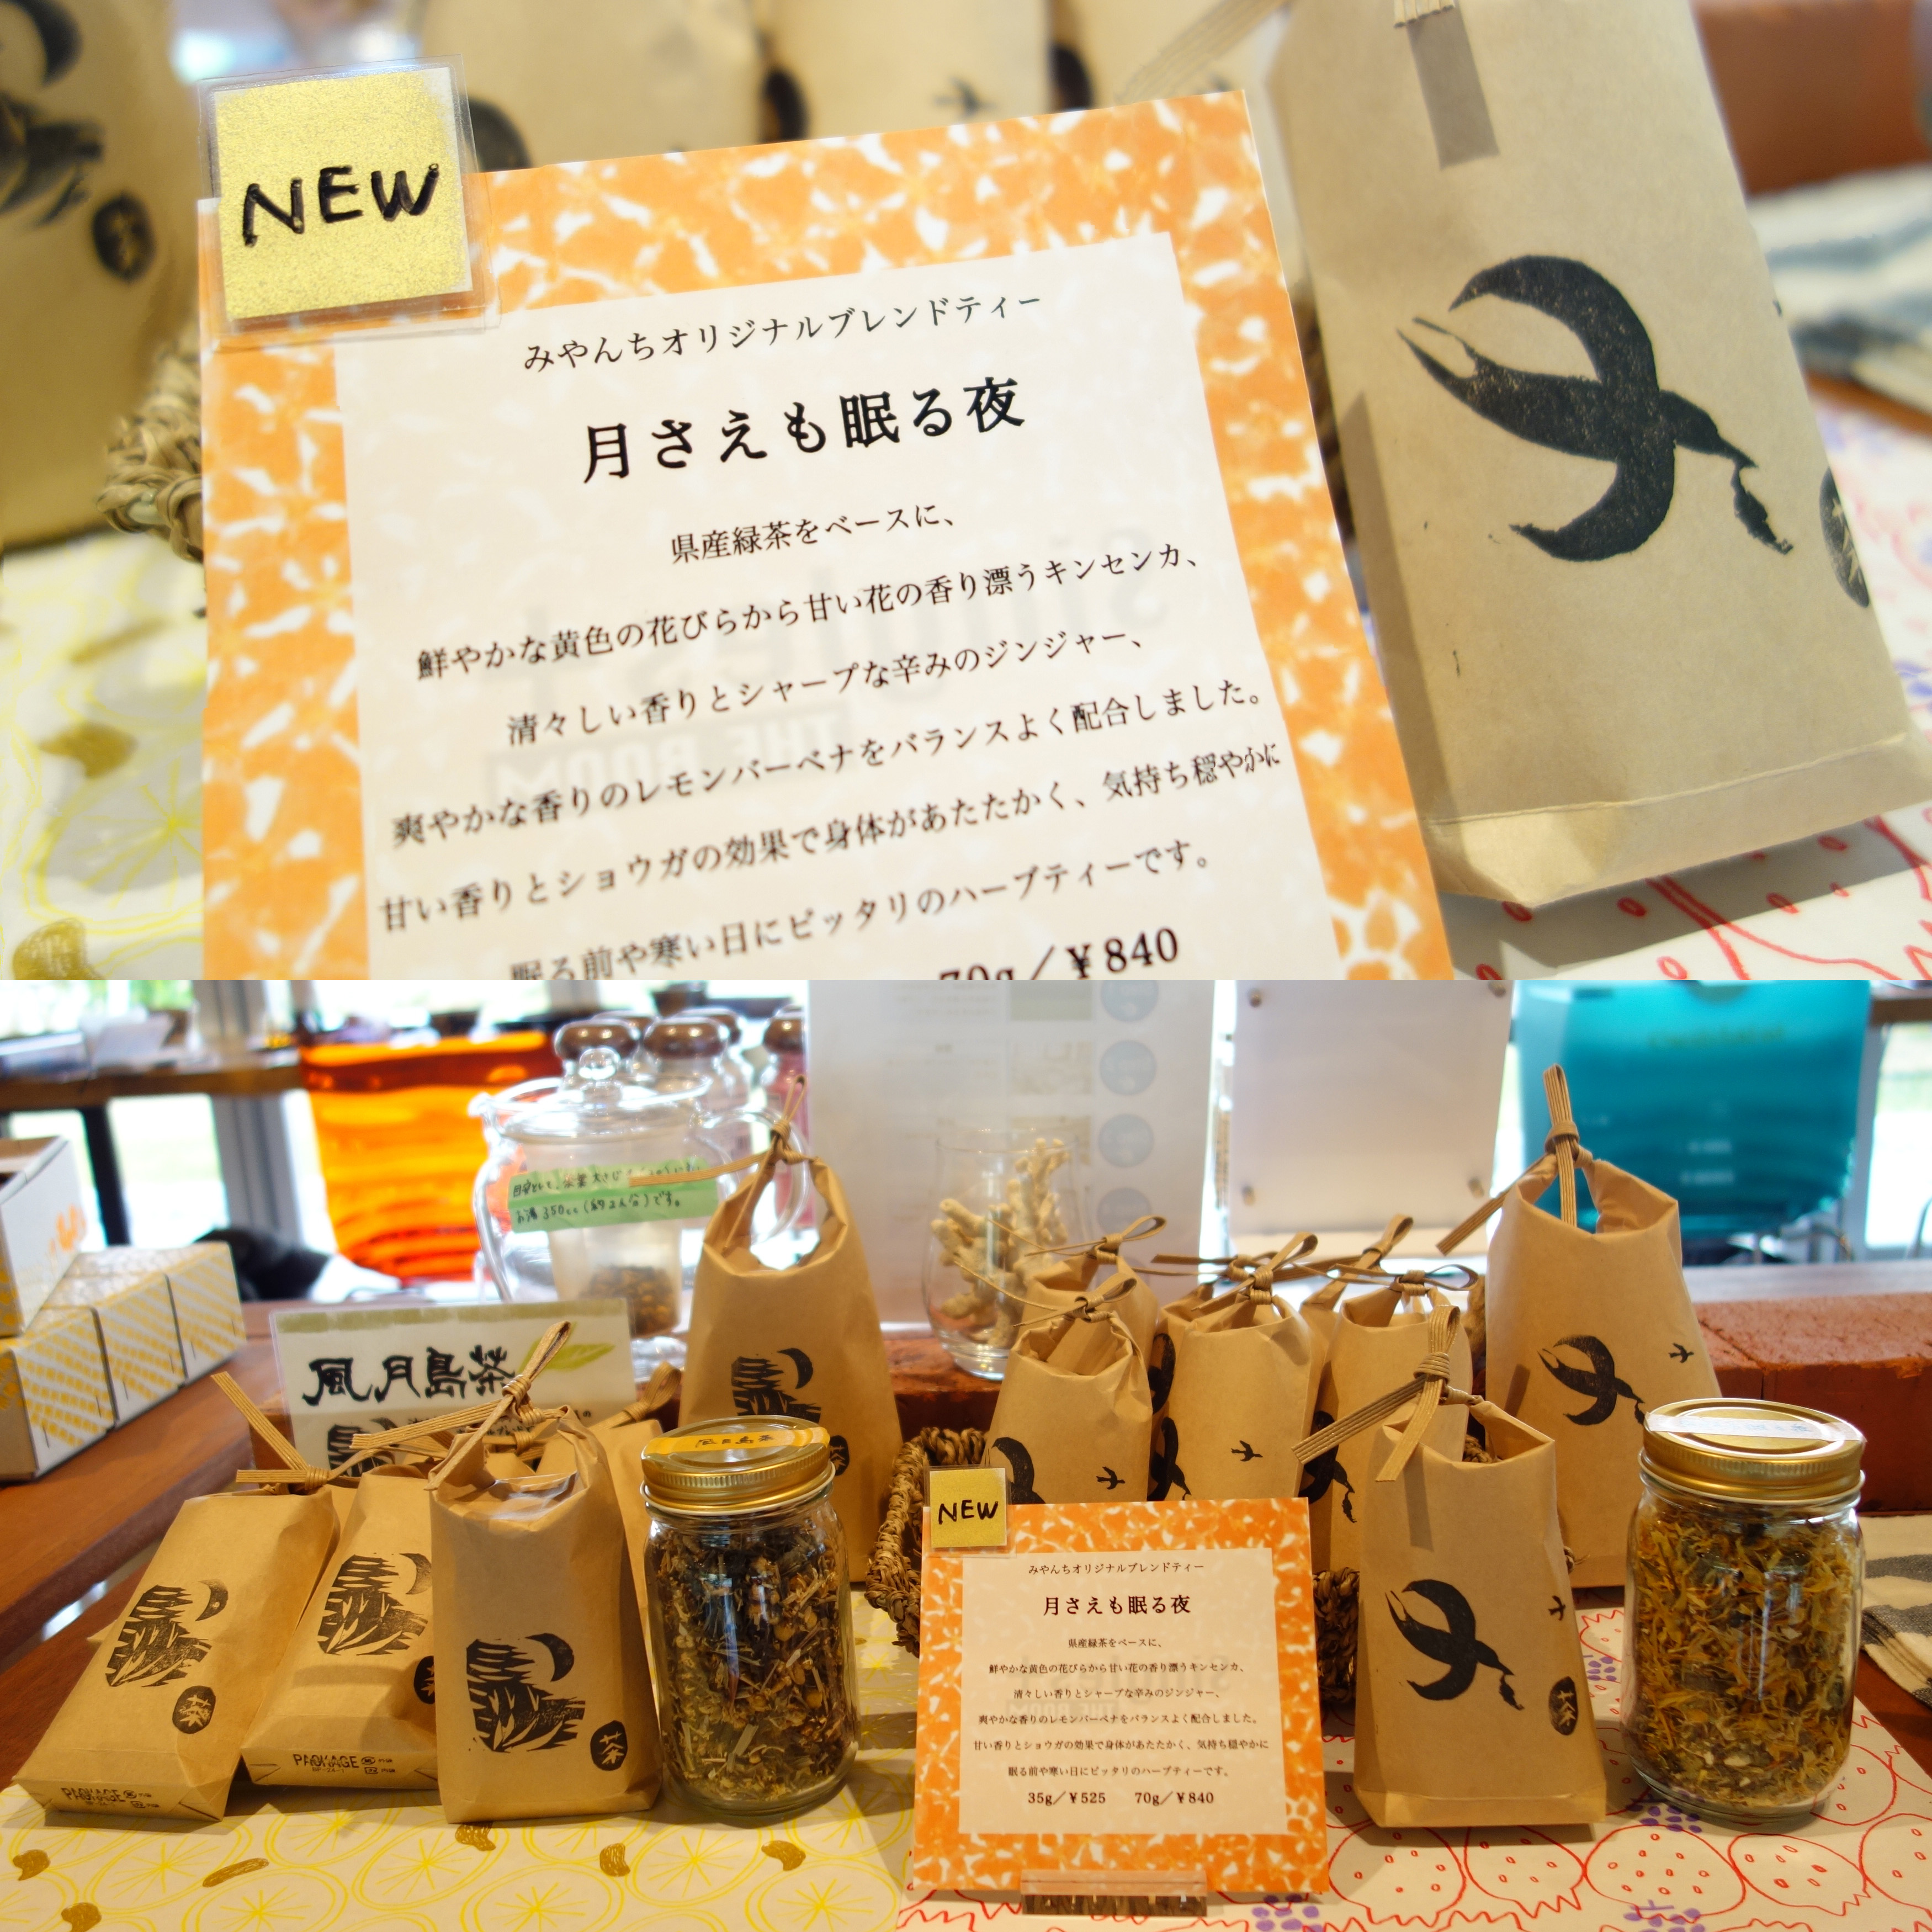 KOMEBUKURO.comが選ばれる理由 | オリジナルの米袋を作るなら米袋.com